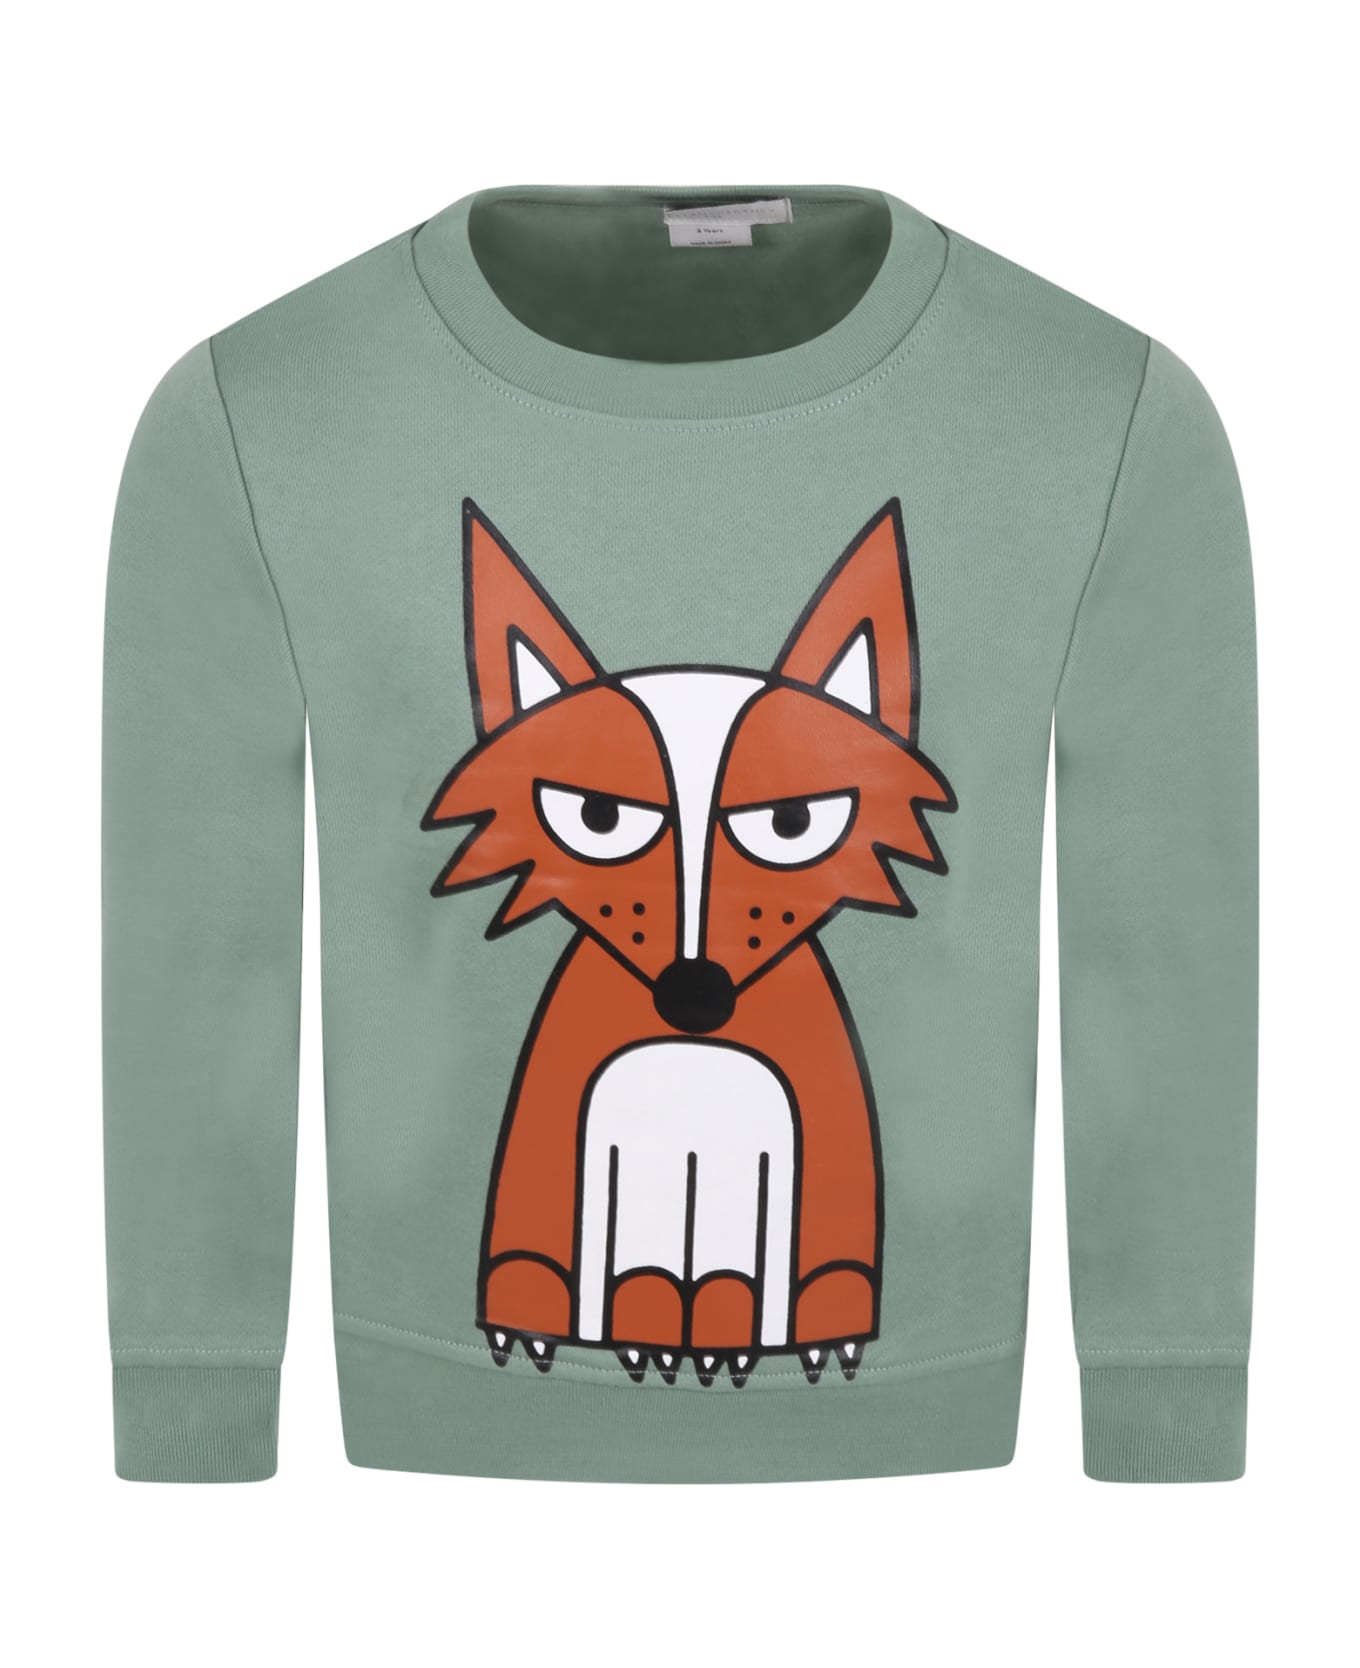 Stella McCartney Kids Green Sweatshirt For Boy With Fox - Green